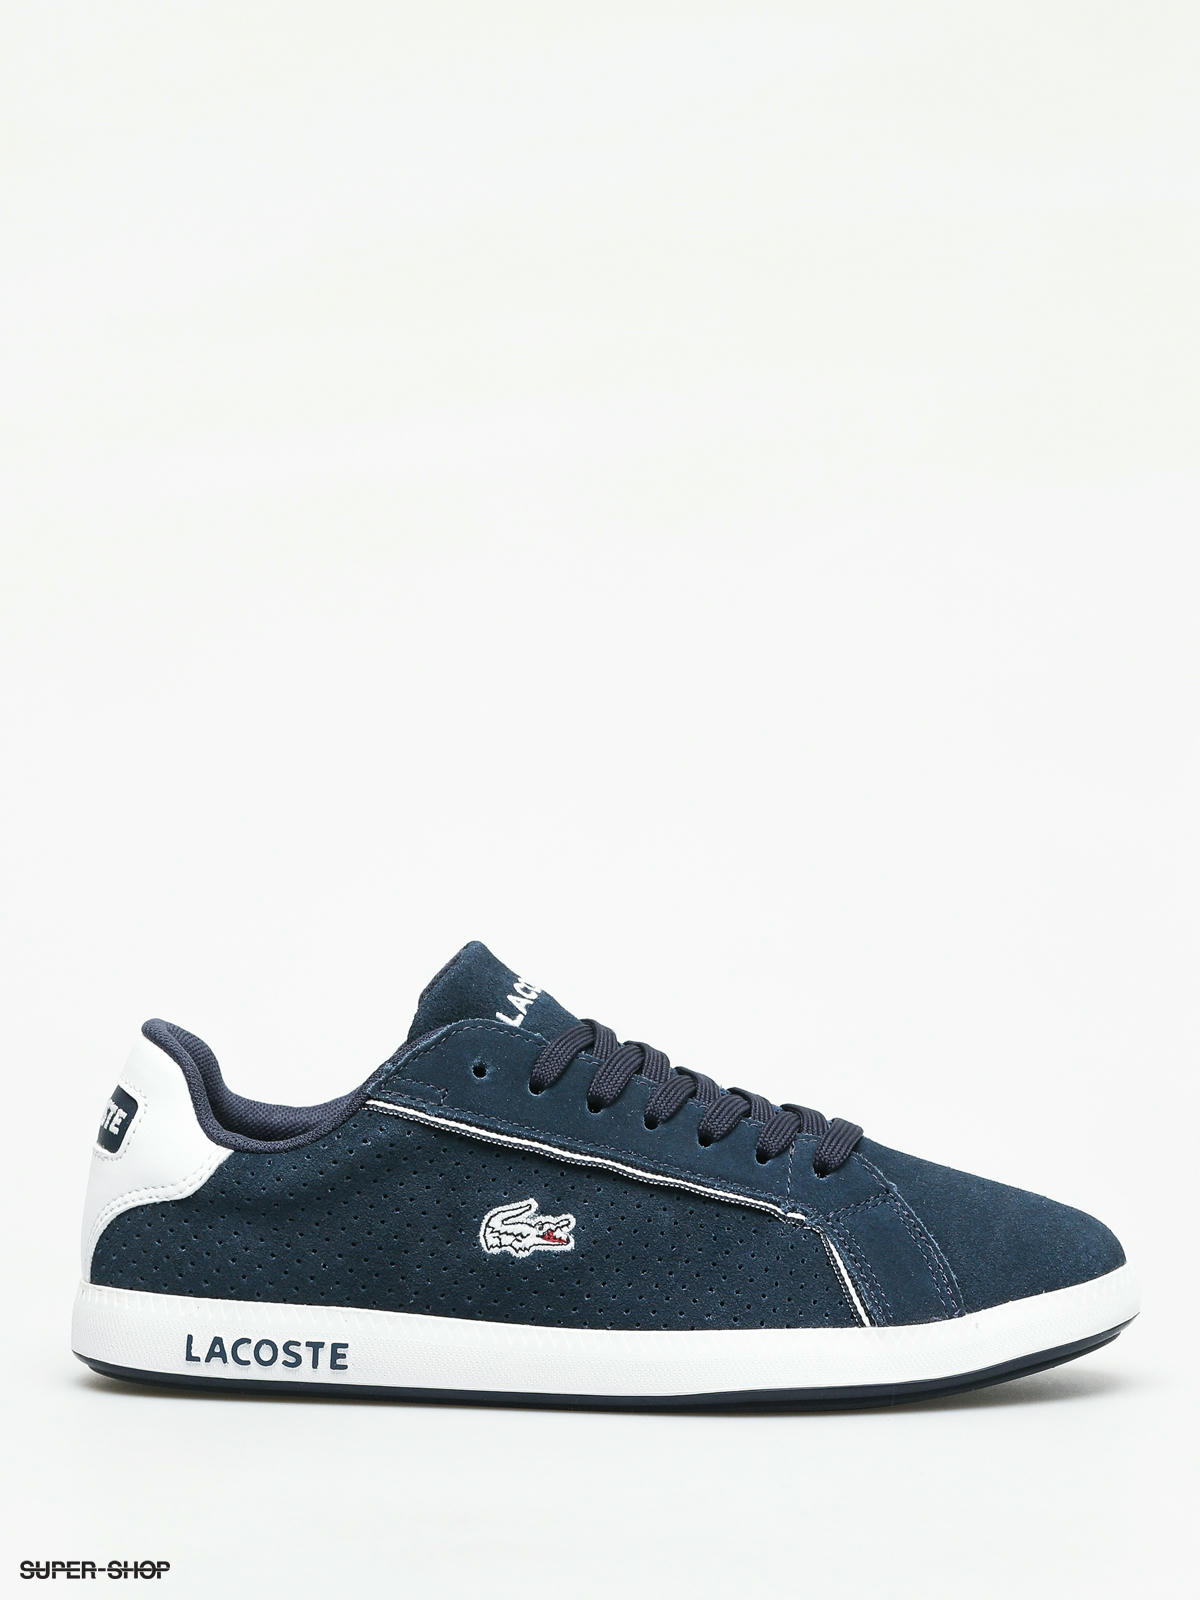 Lacoste Graduate 119 4 Shoes Wmn (navy/white)